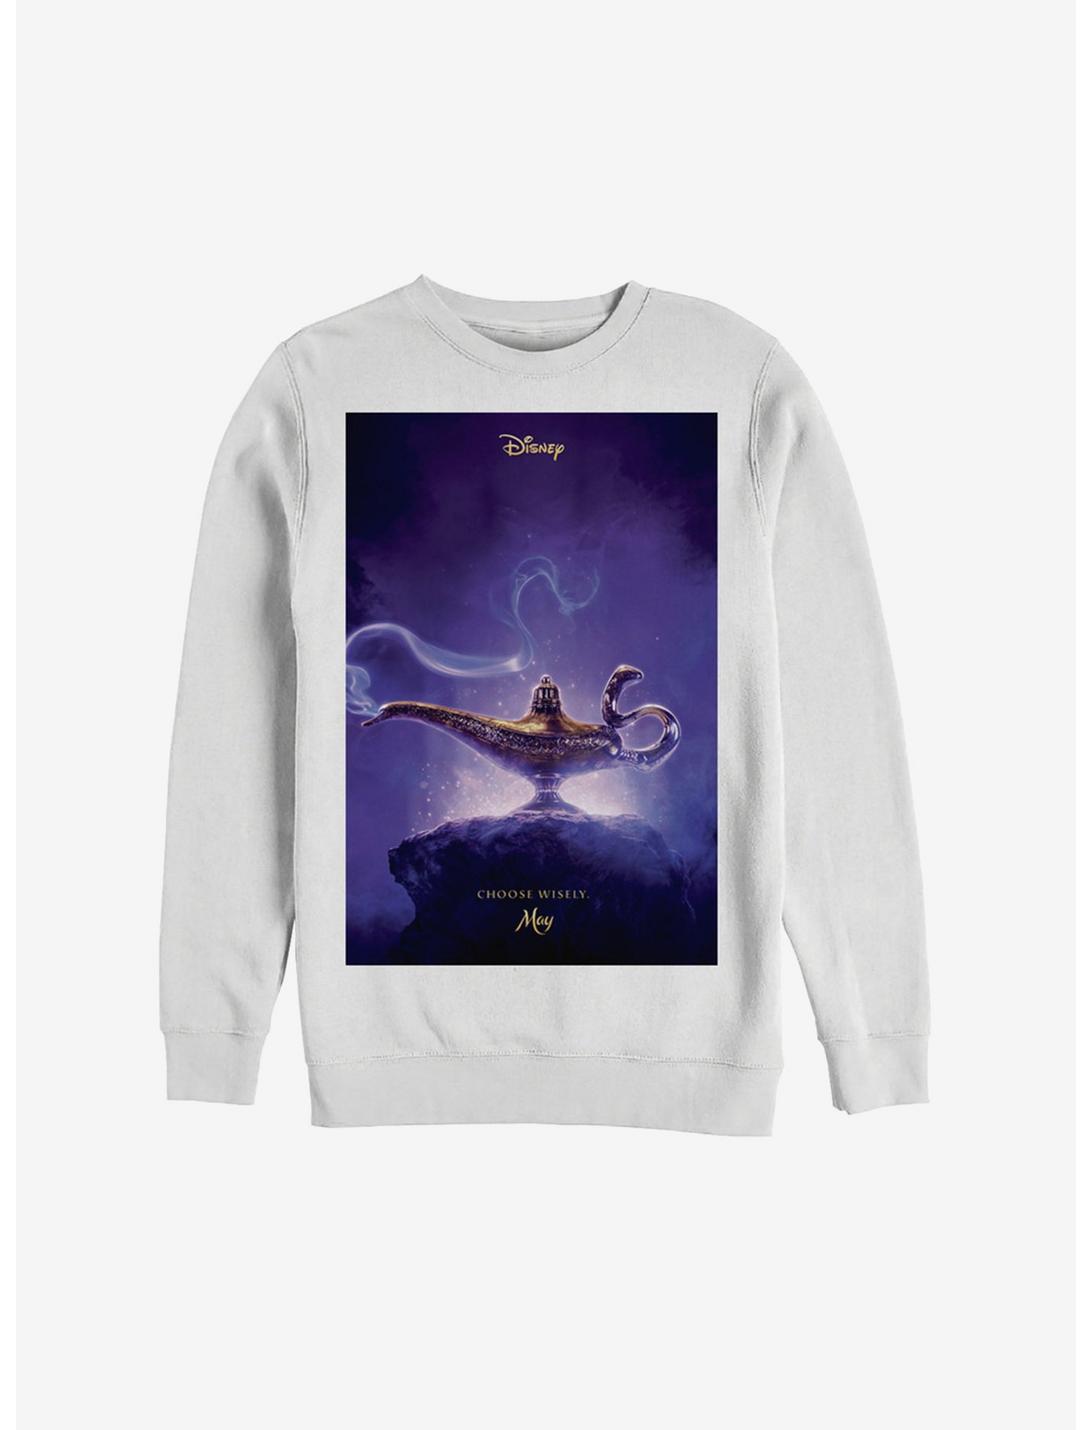 Disney Aladdin 2019 Live Action Poster Sweatshirt, WHITE, hi-res